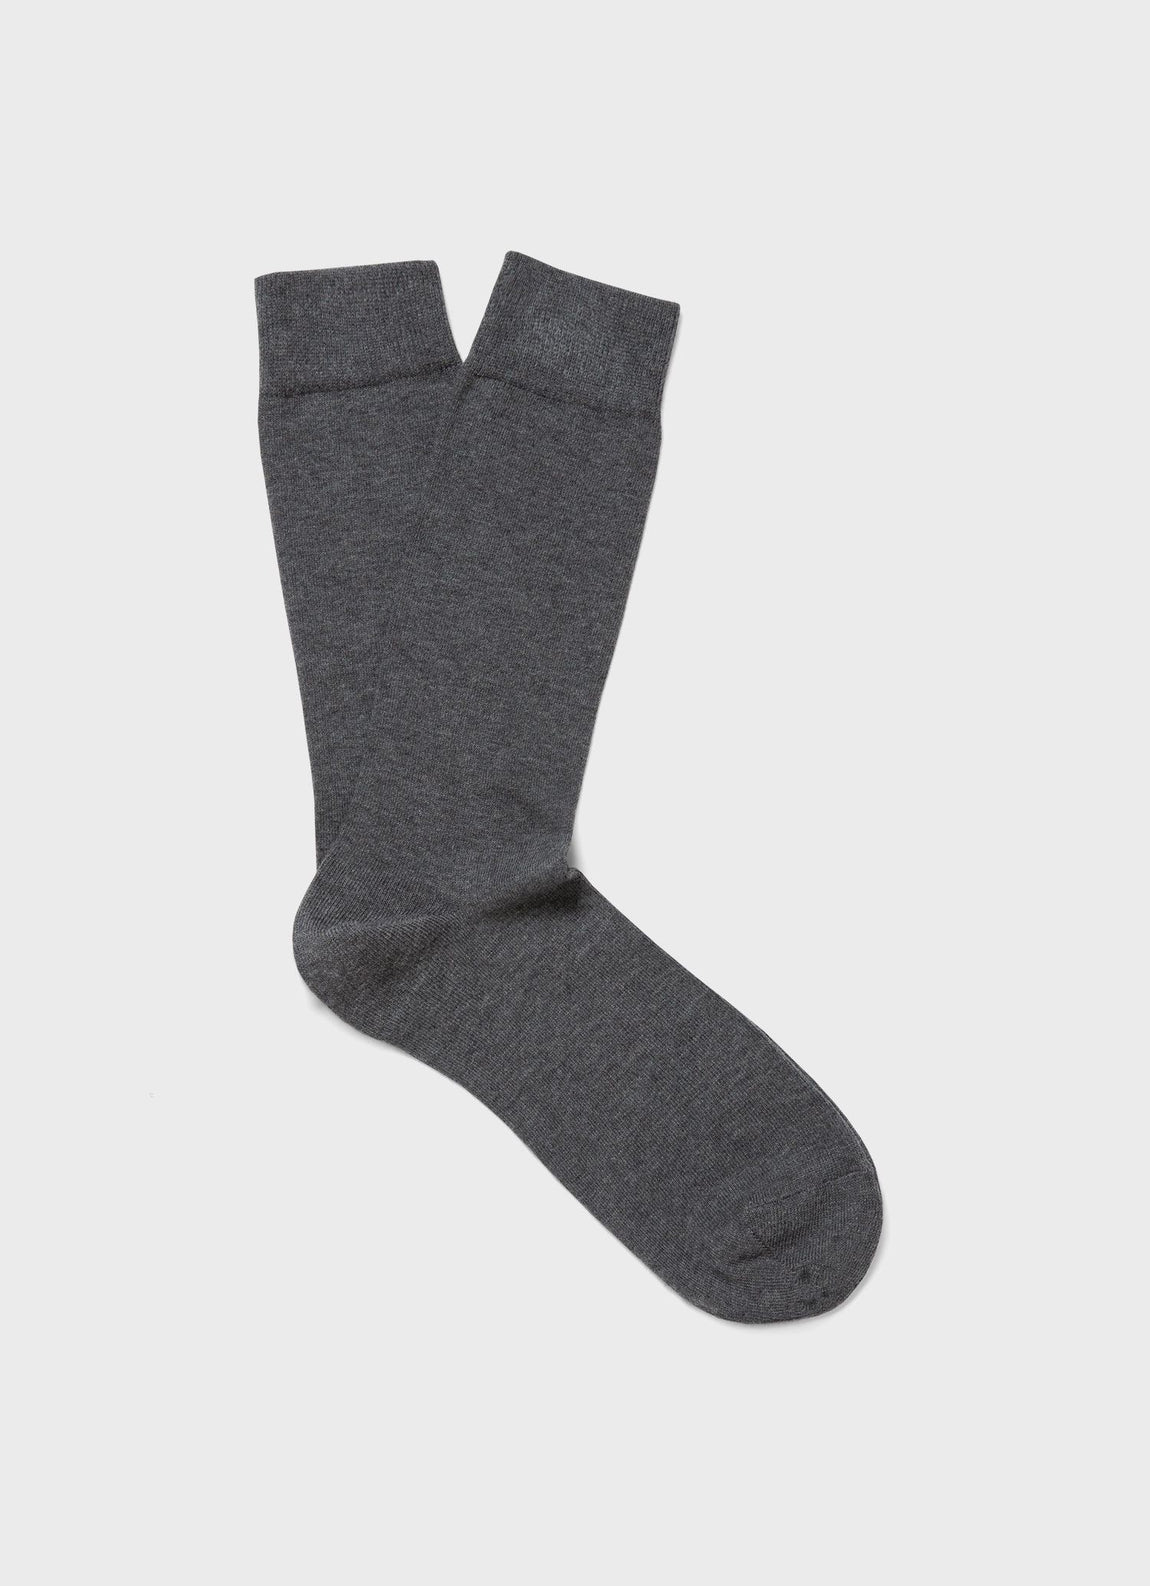 Men's Cotton Socks in Mid Grey Melange | Sunspel